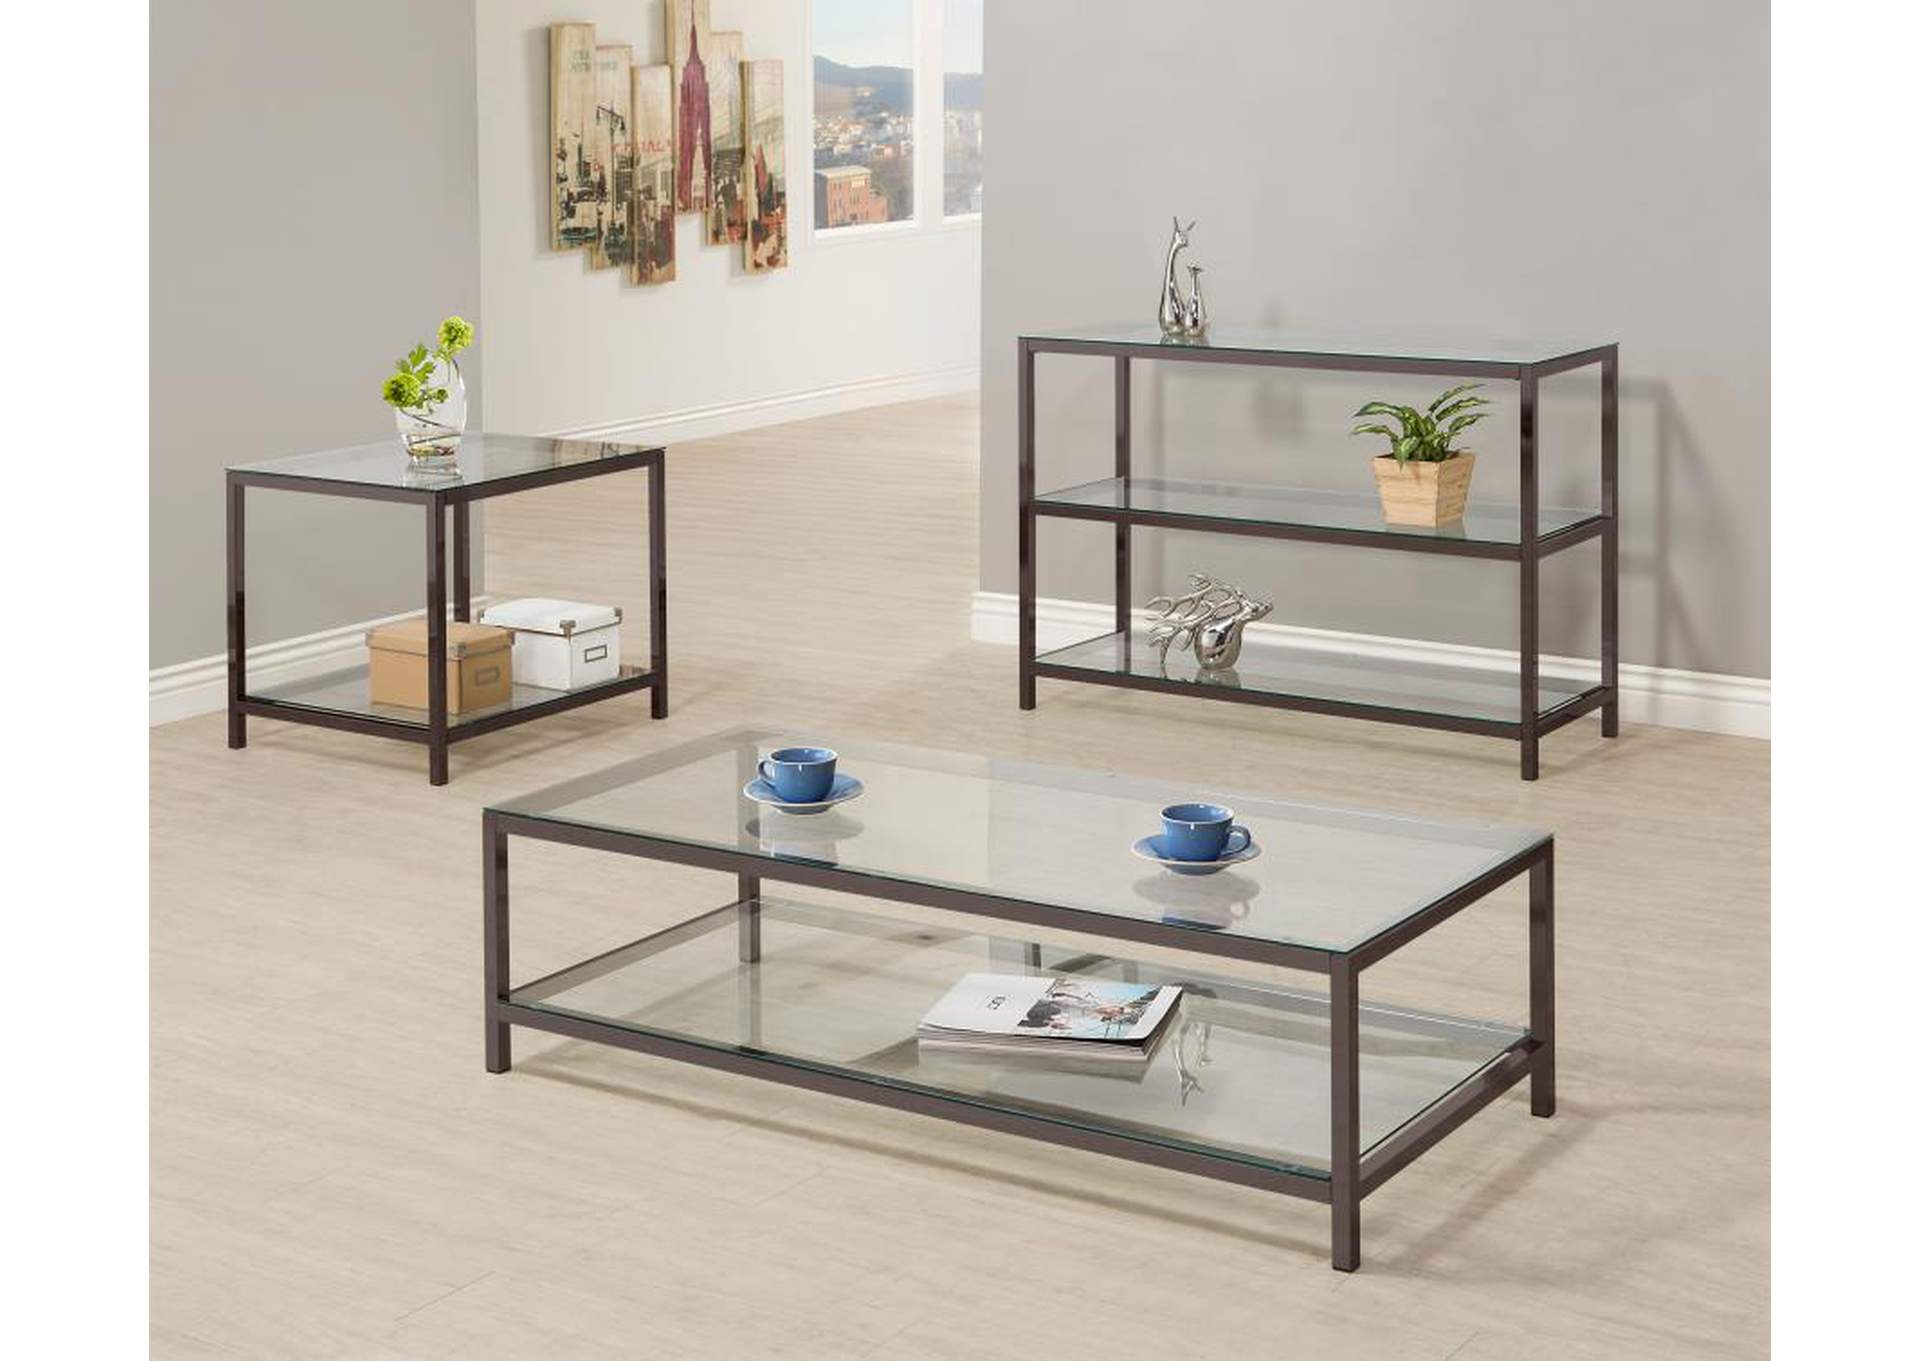 Ontario Coffee Table with Glass Shelf Black Nickel,Coaster Furniture